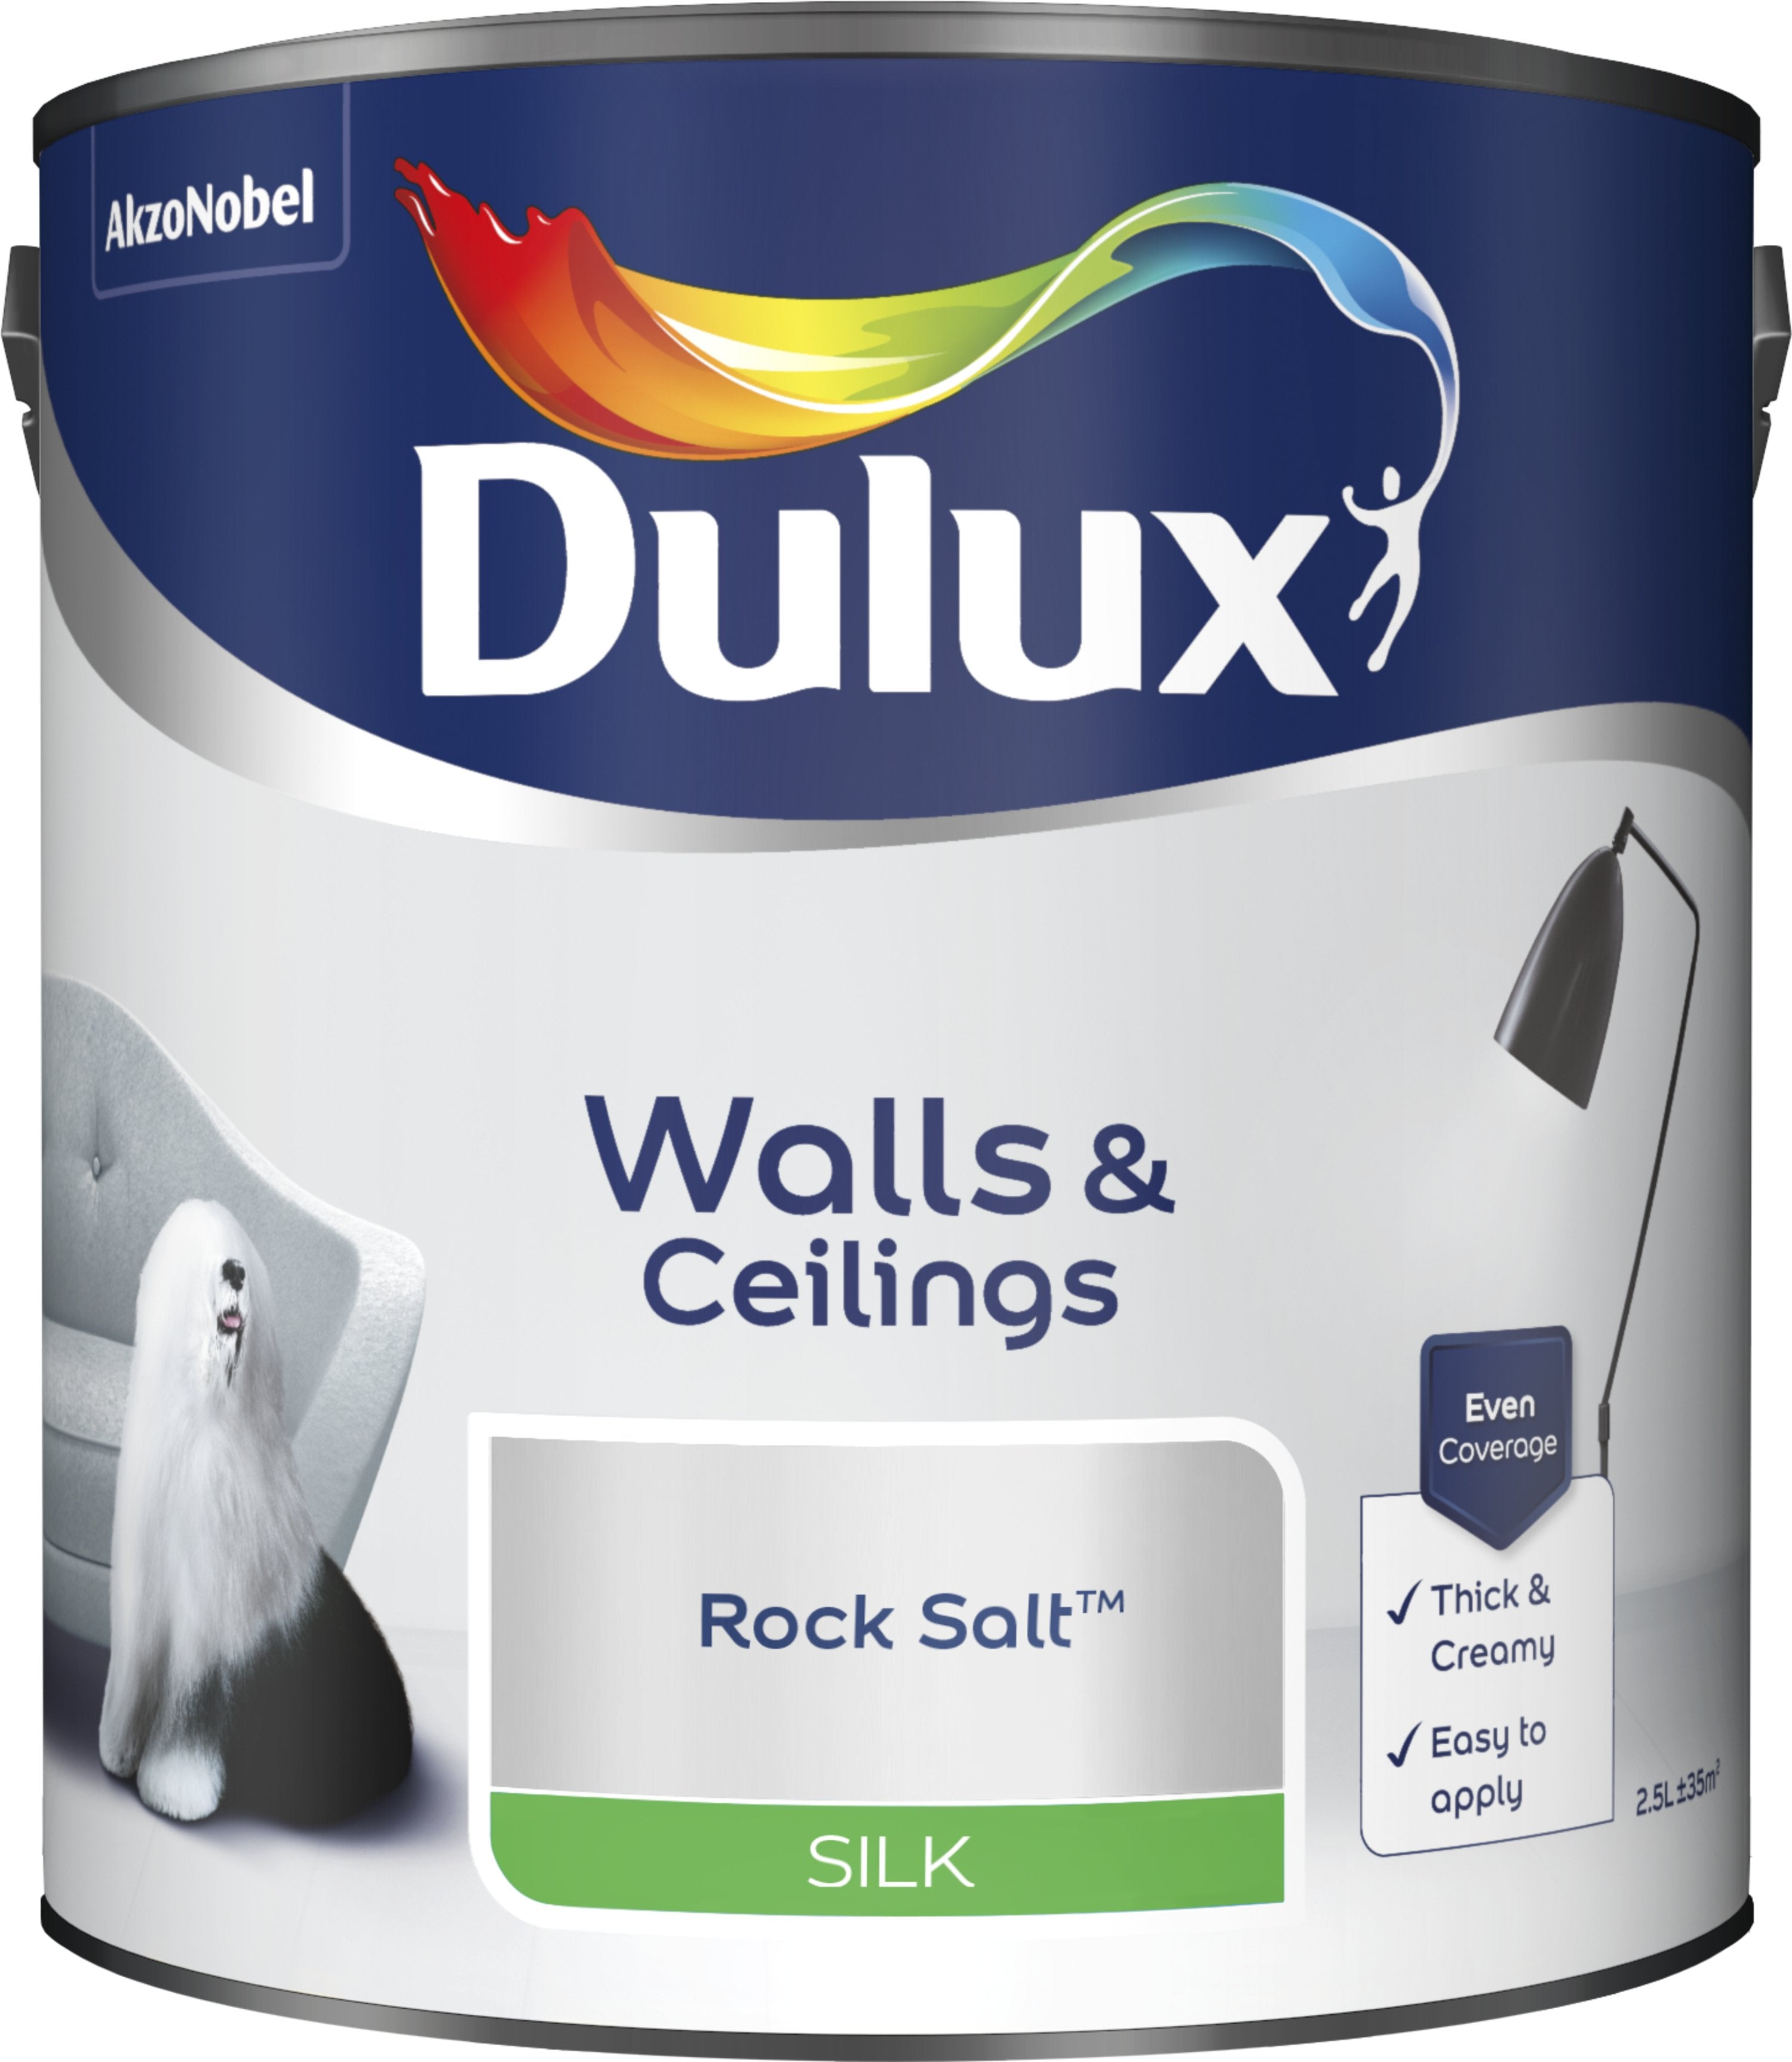 Dulux Silk Emulsion Paint For Walls And Ceilings - Rock Salt 2.5L Garden & Diy  Home Improvements  